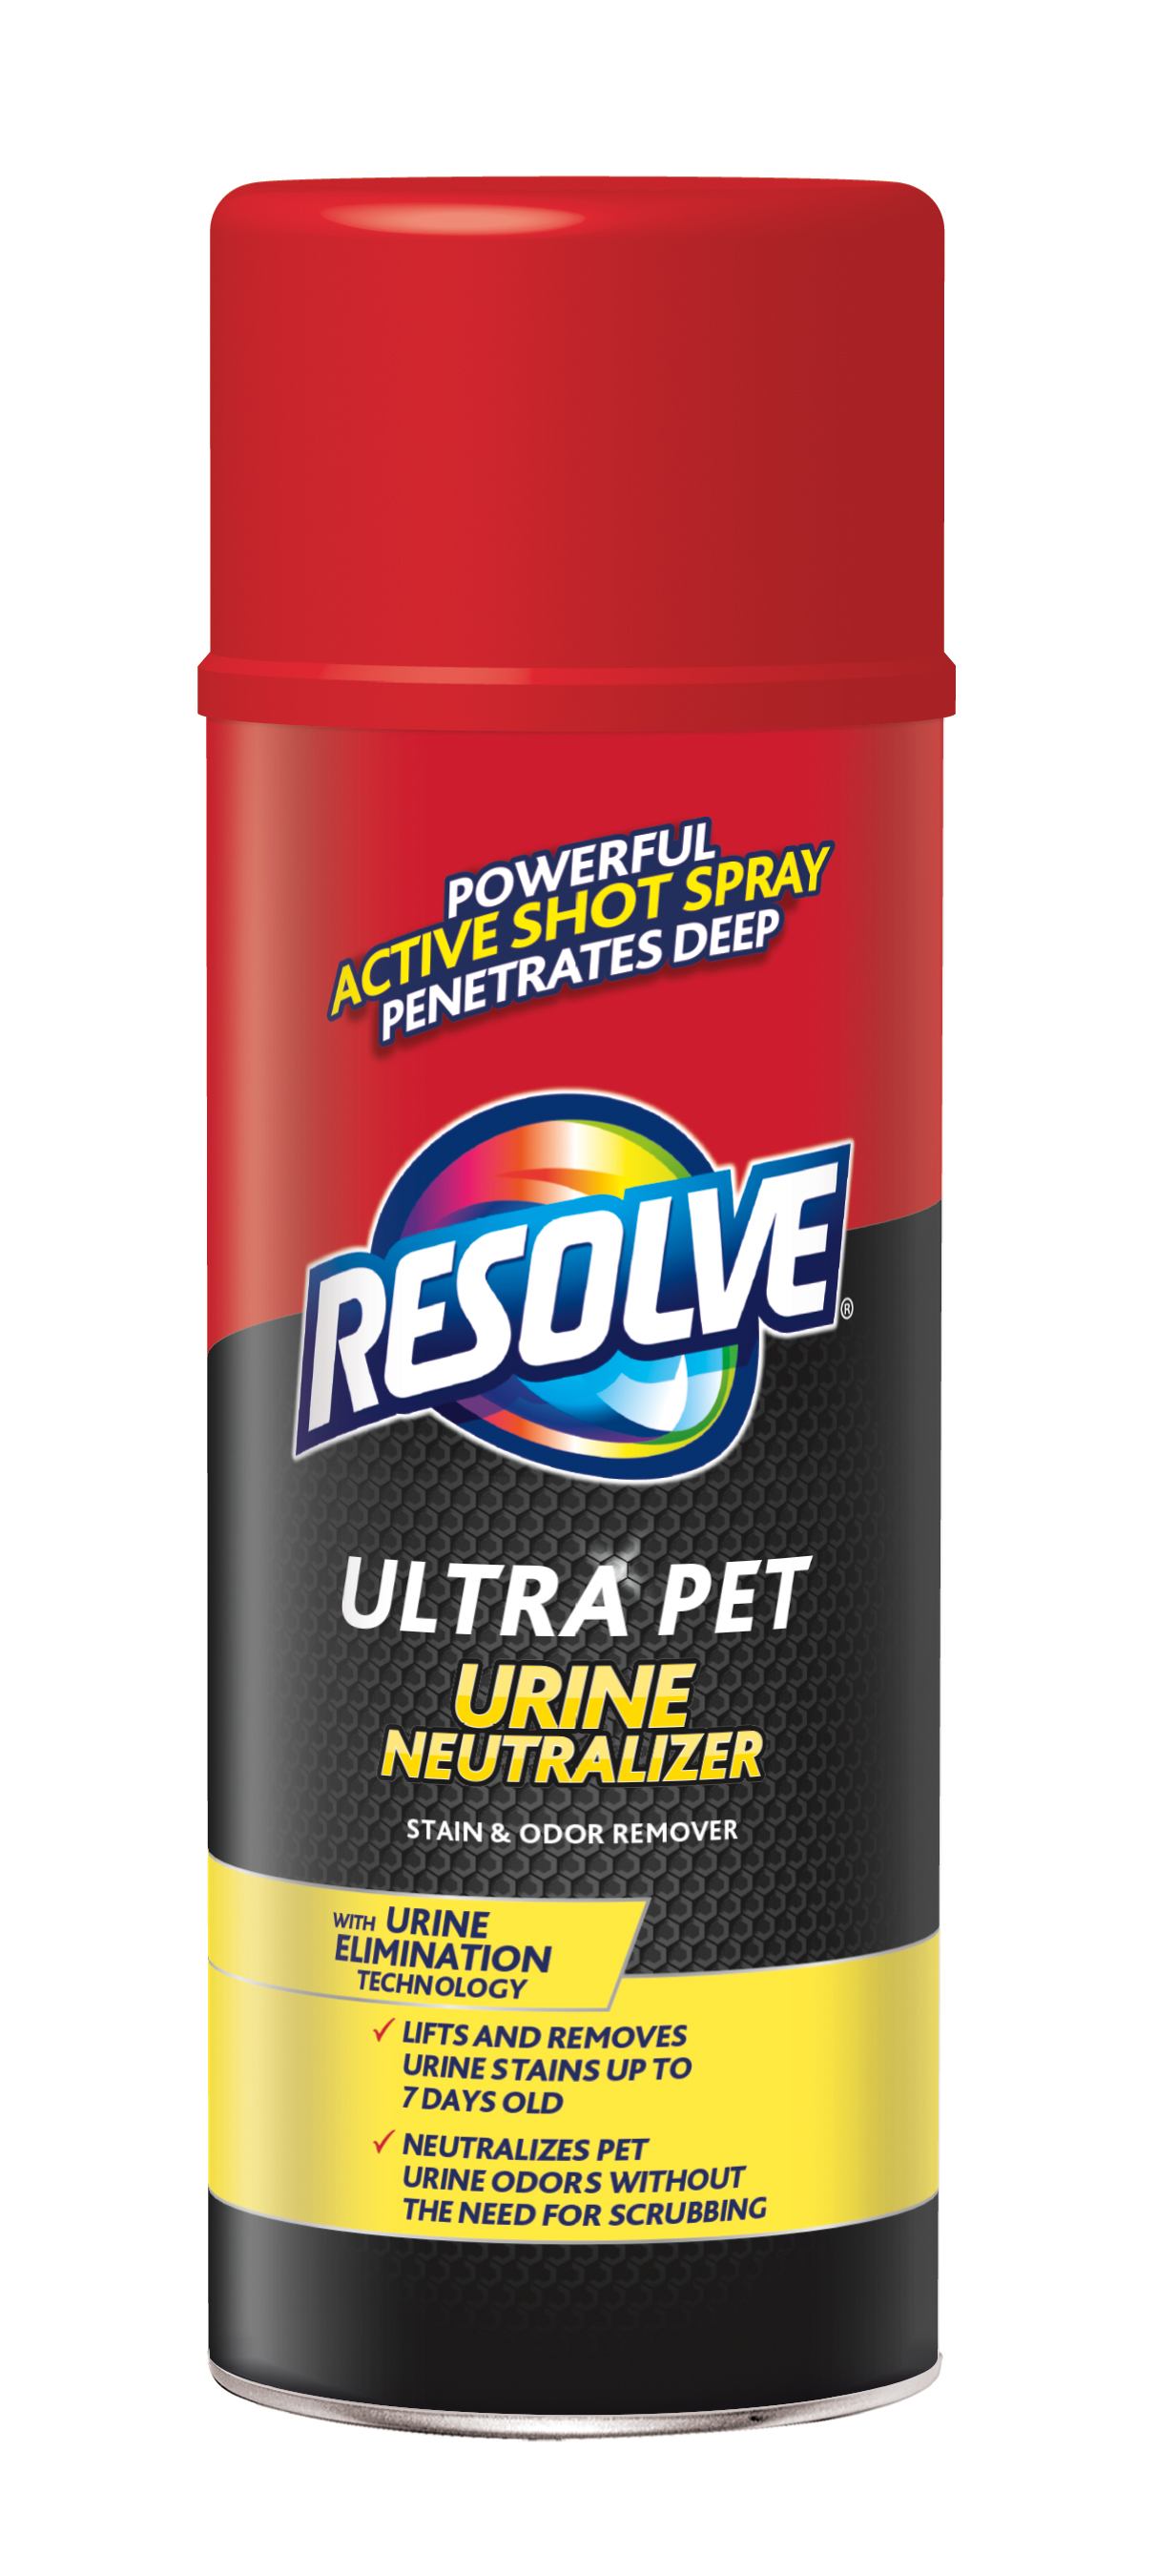 RESOLVE® ULTRA PET Urine Neutralizer Stain & Odor Remover Aerosol